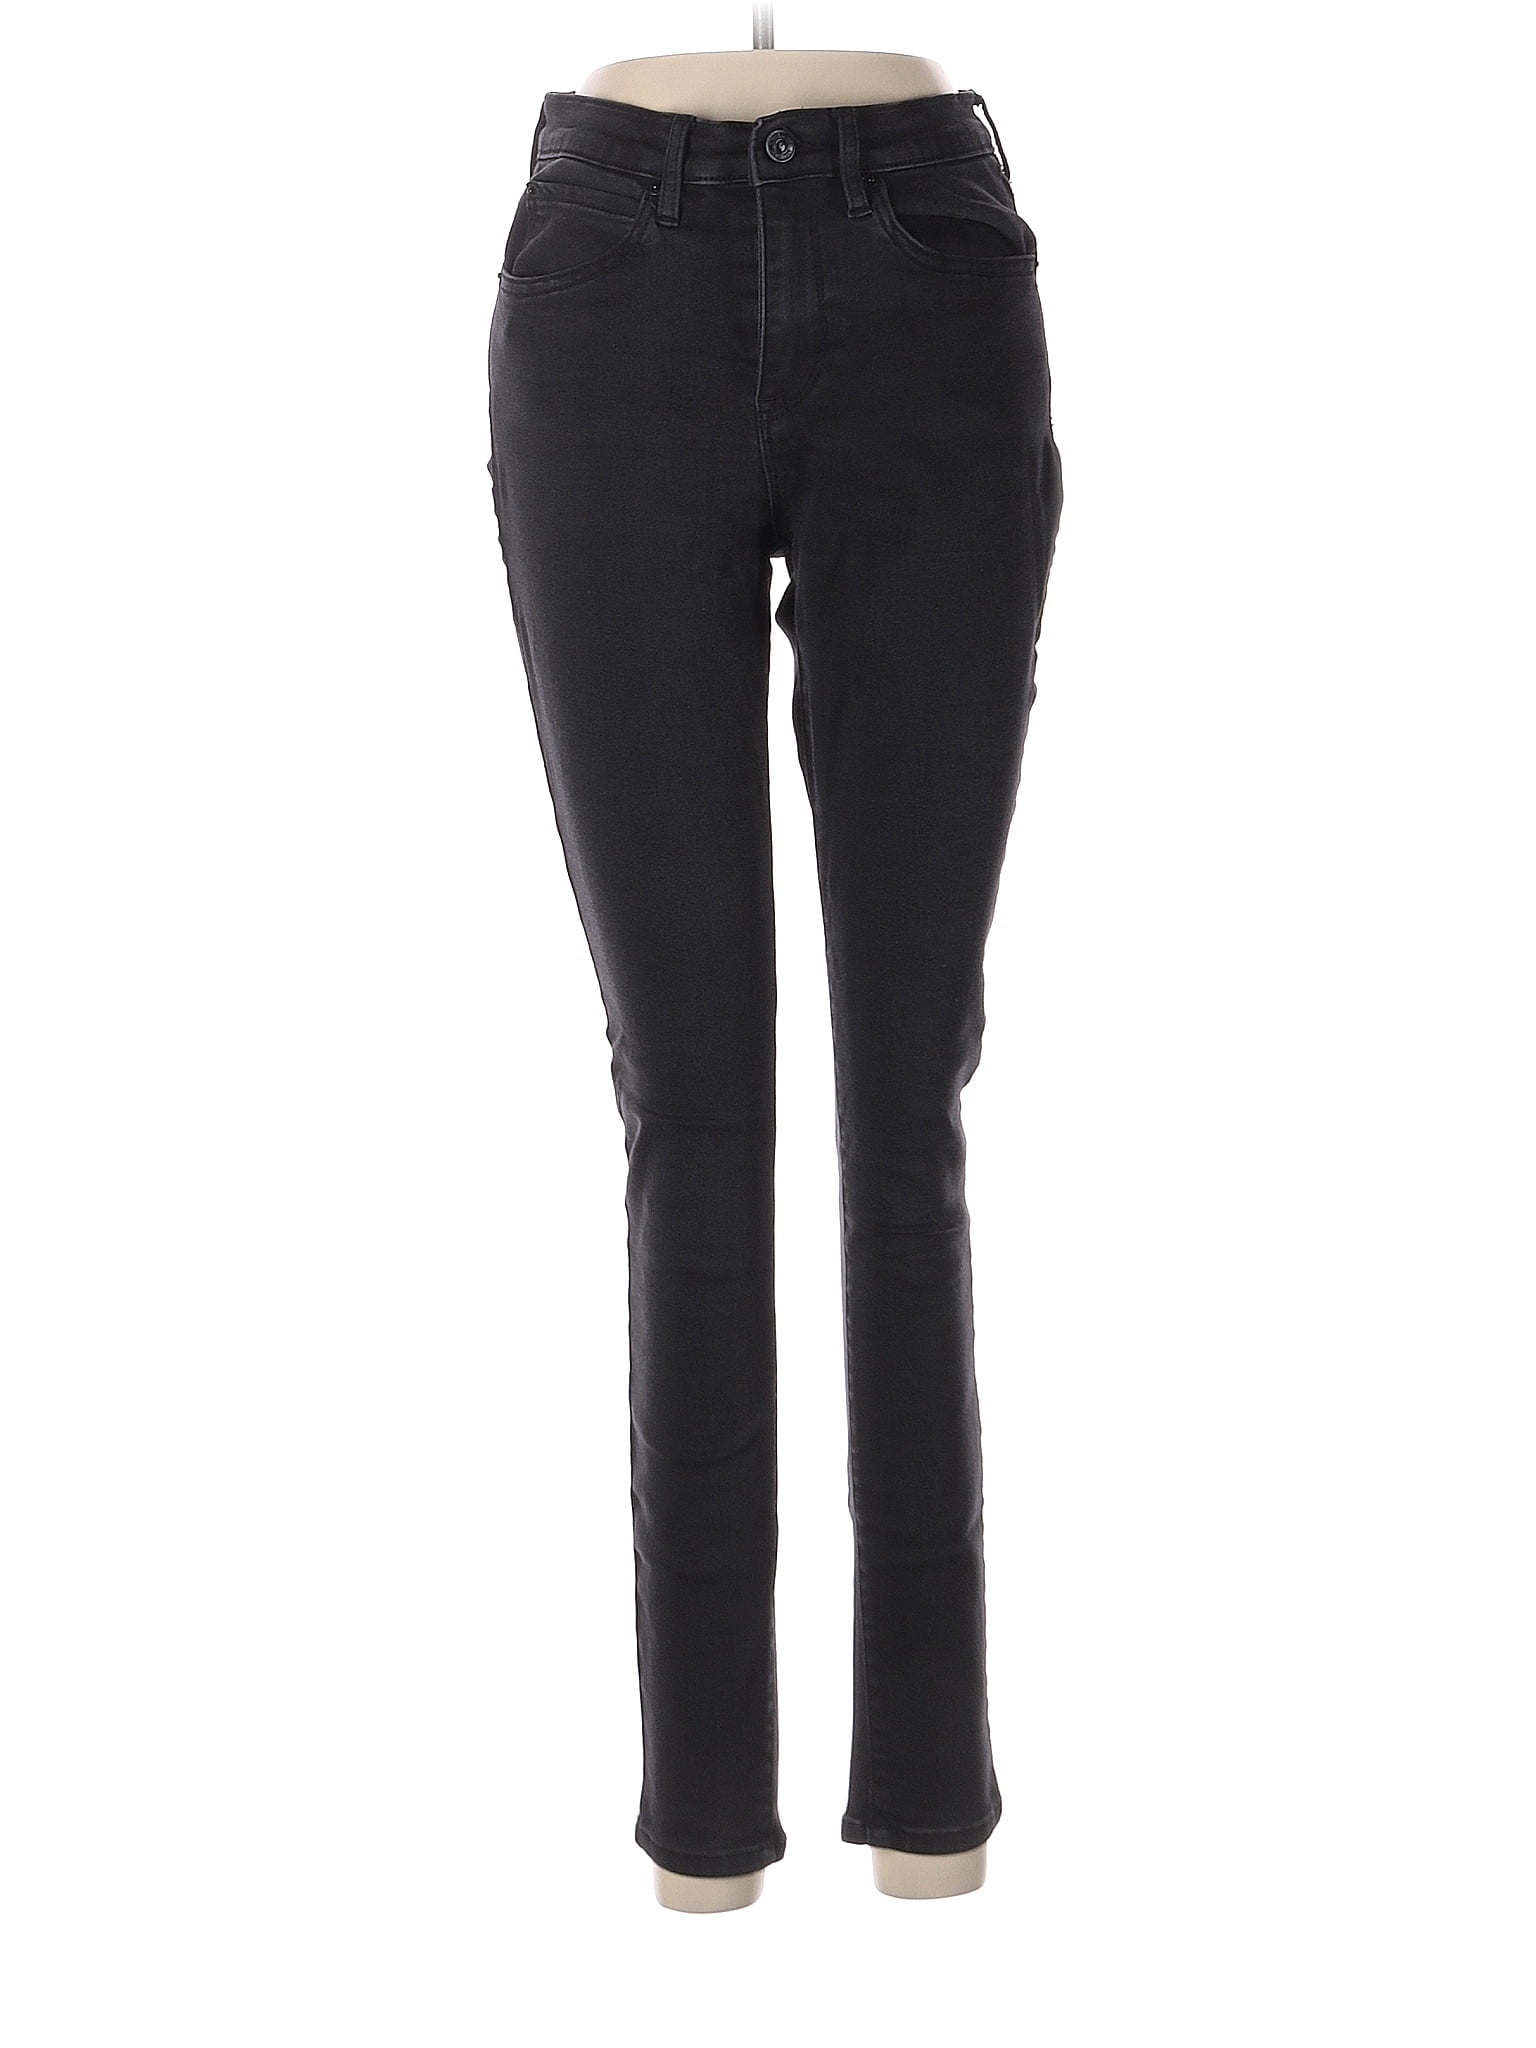 Pre-Owned Nicole Miller New York Women's Size 4 Jeans - Walmart.com